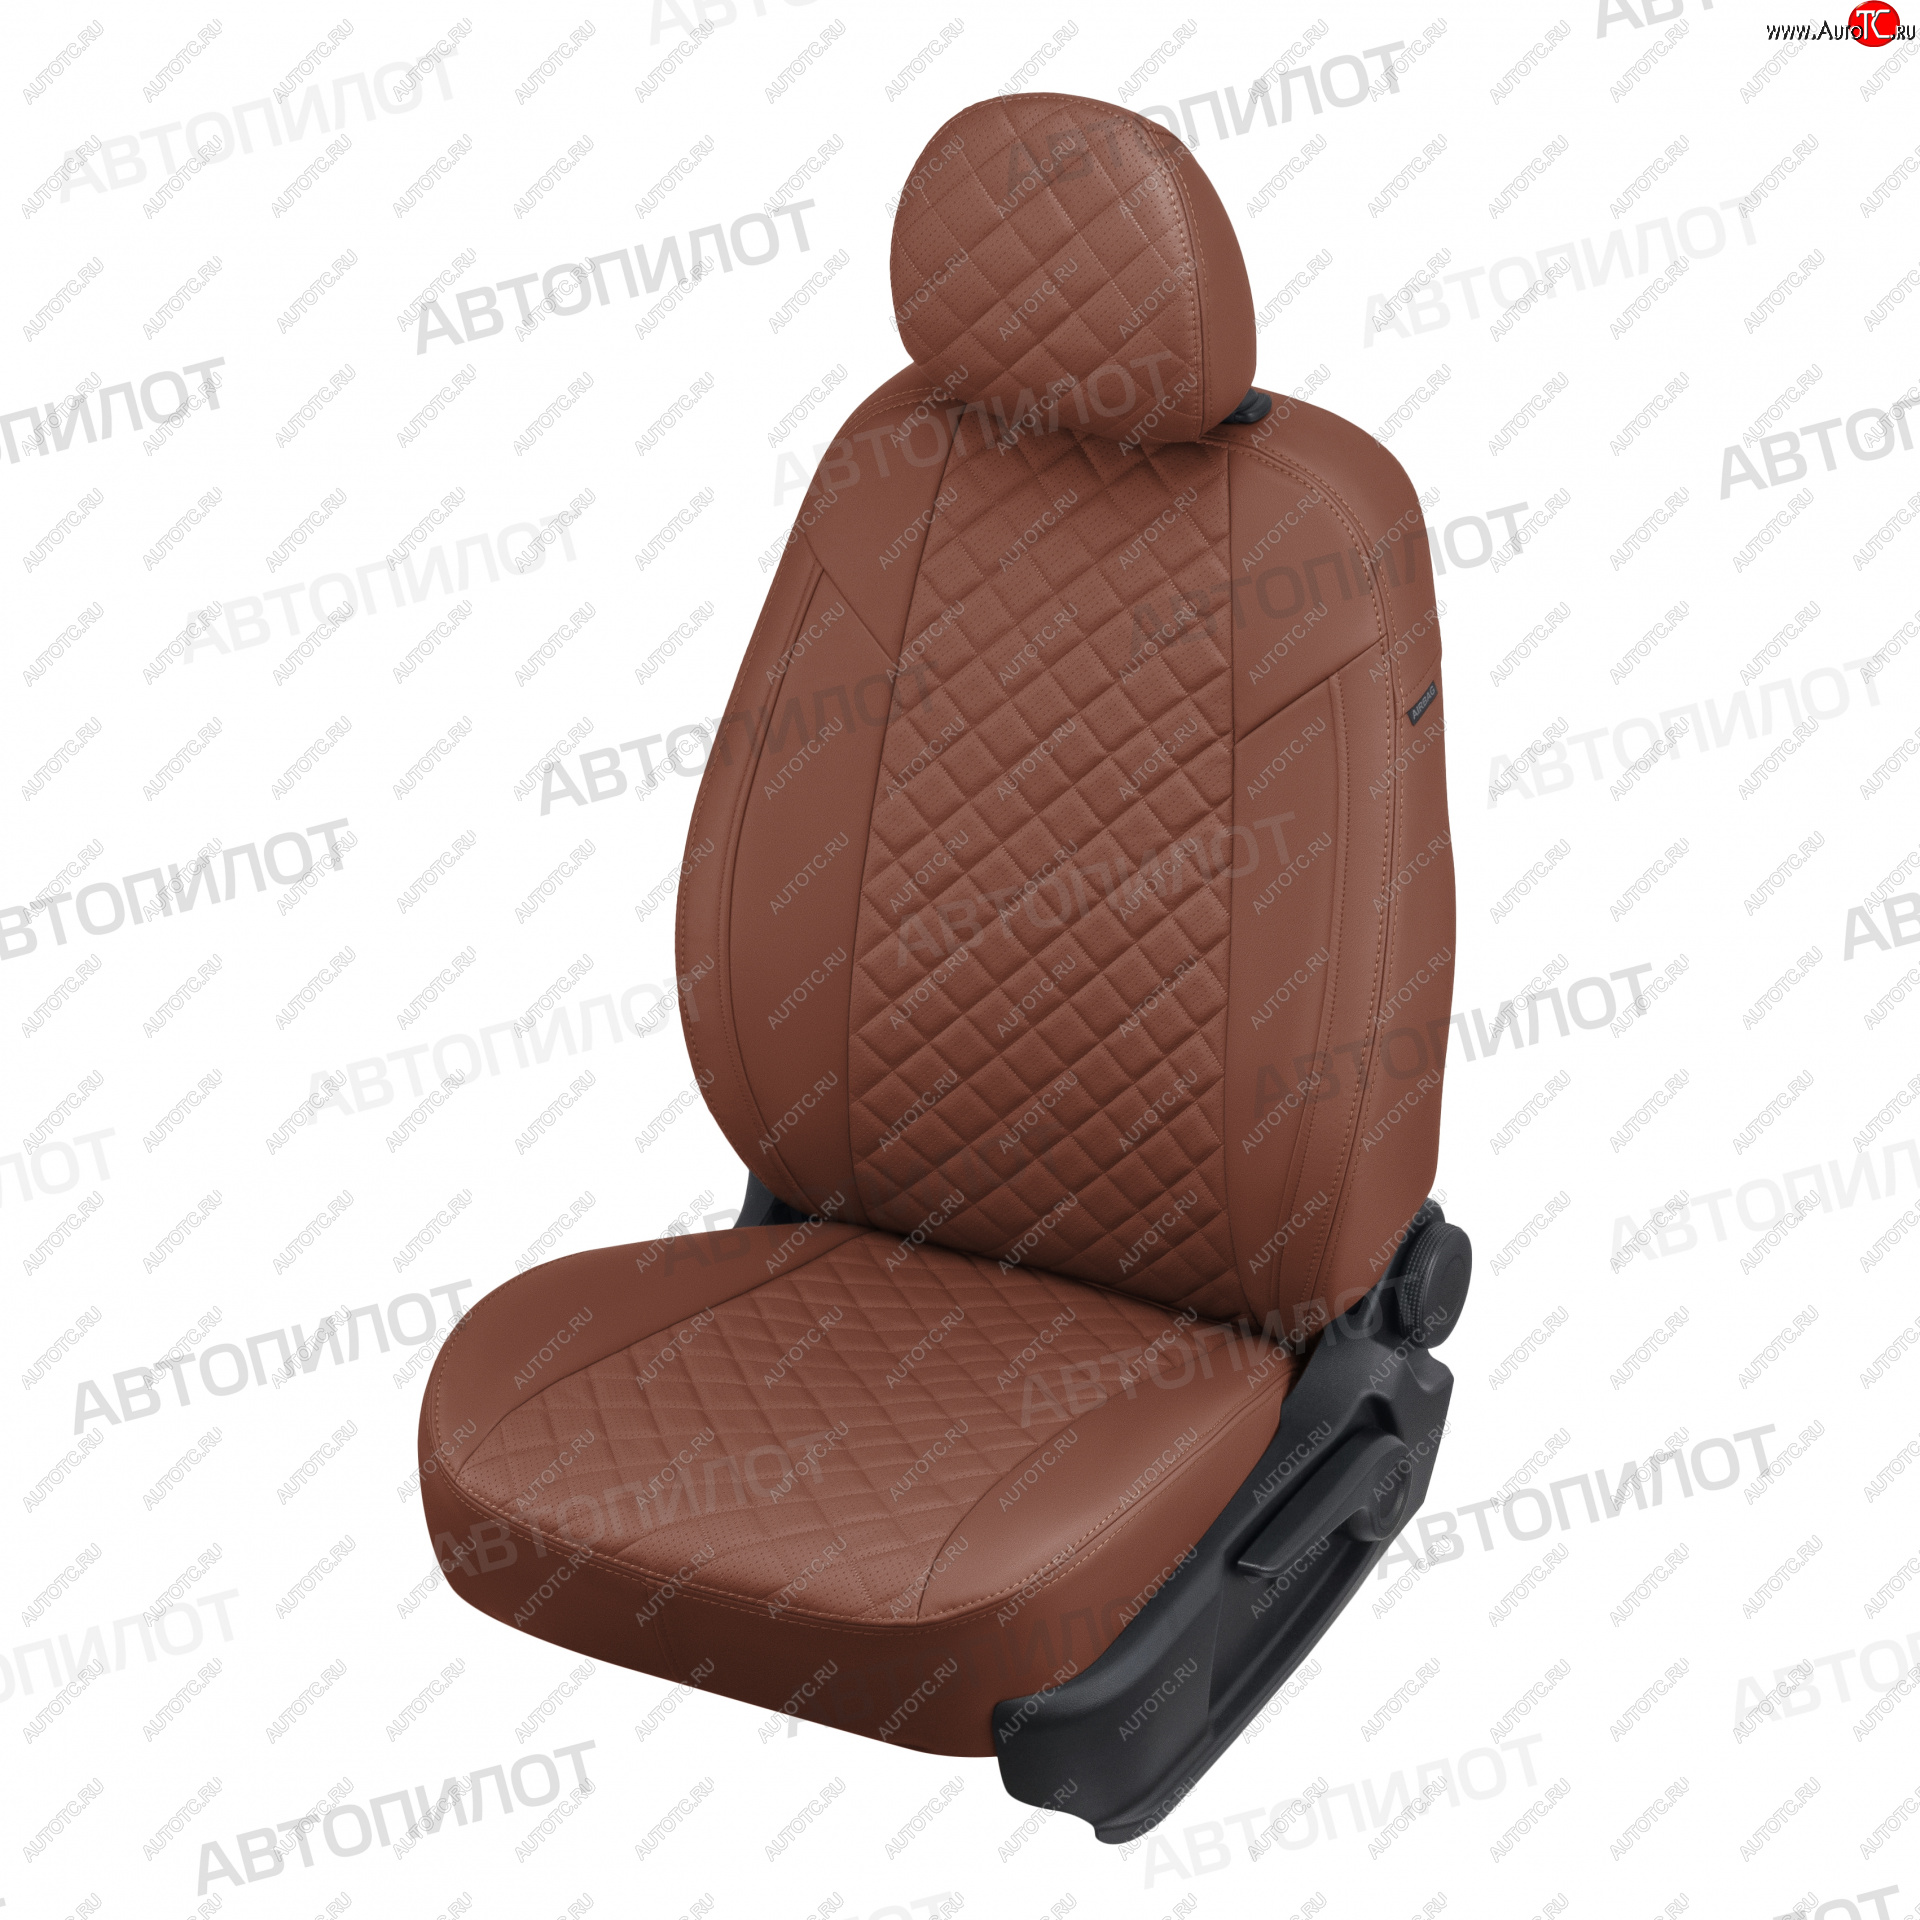 7 599 р. Чехлы сидений (экокожа, Classic) Автопилот Ромб  KIA Cerato  3 YD (2013-2019) (коричневый)